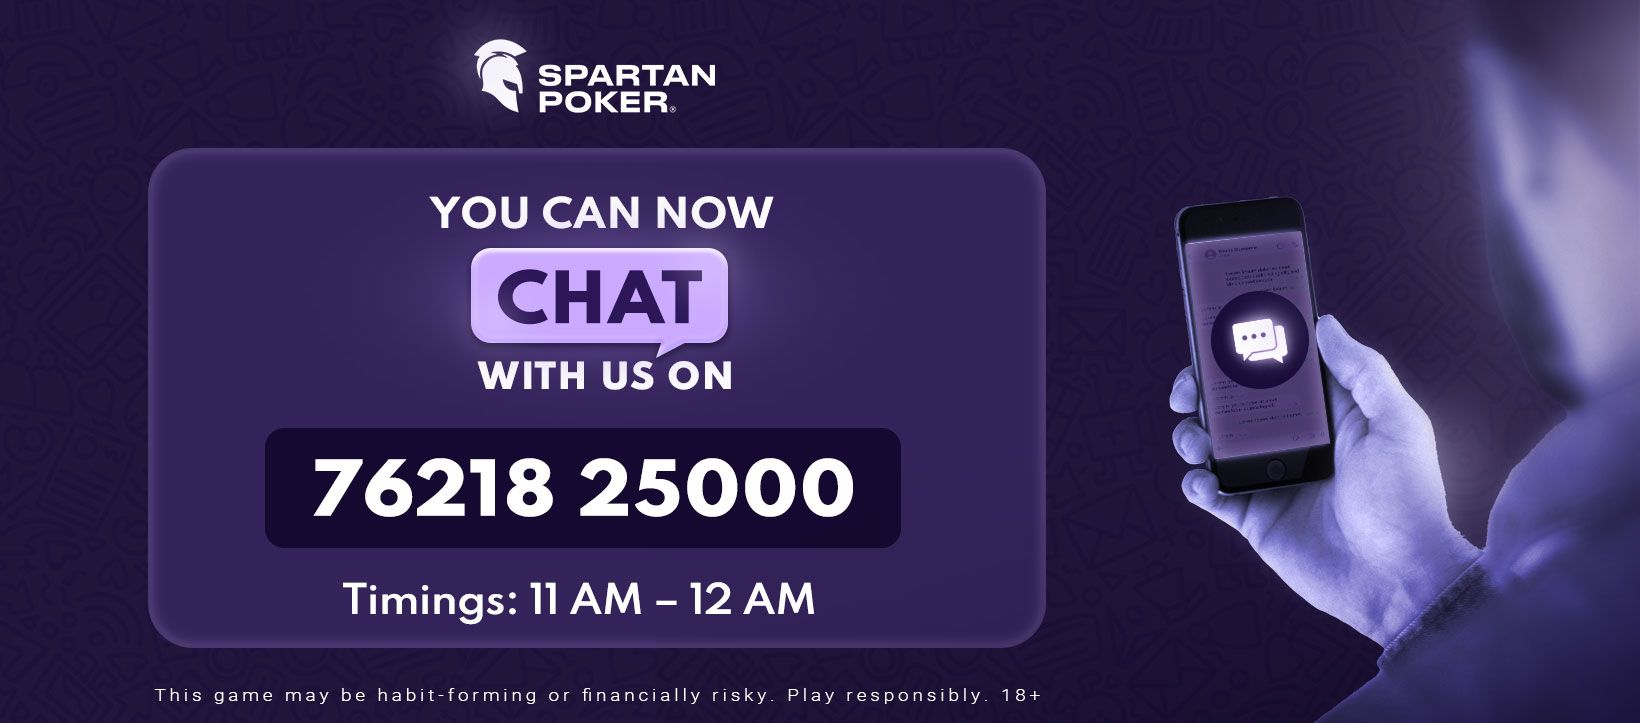 Spartan Poker Customer Care Number